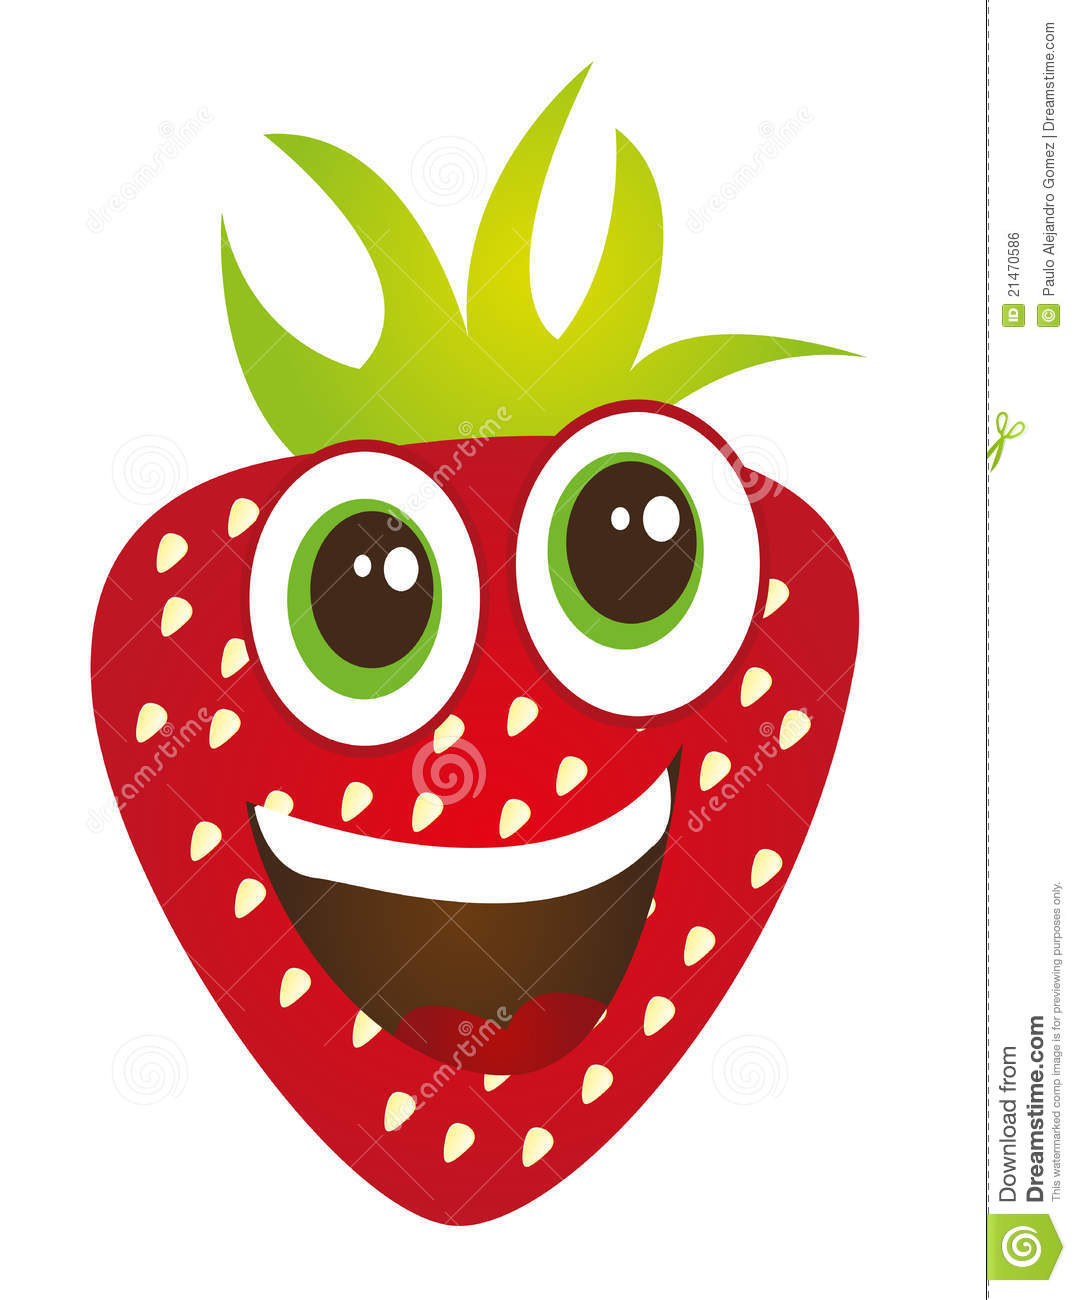 Strawberry Cartoon Royalty Free Stock Image   Image  21470586